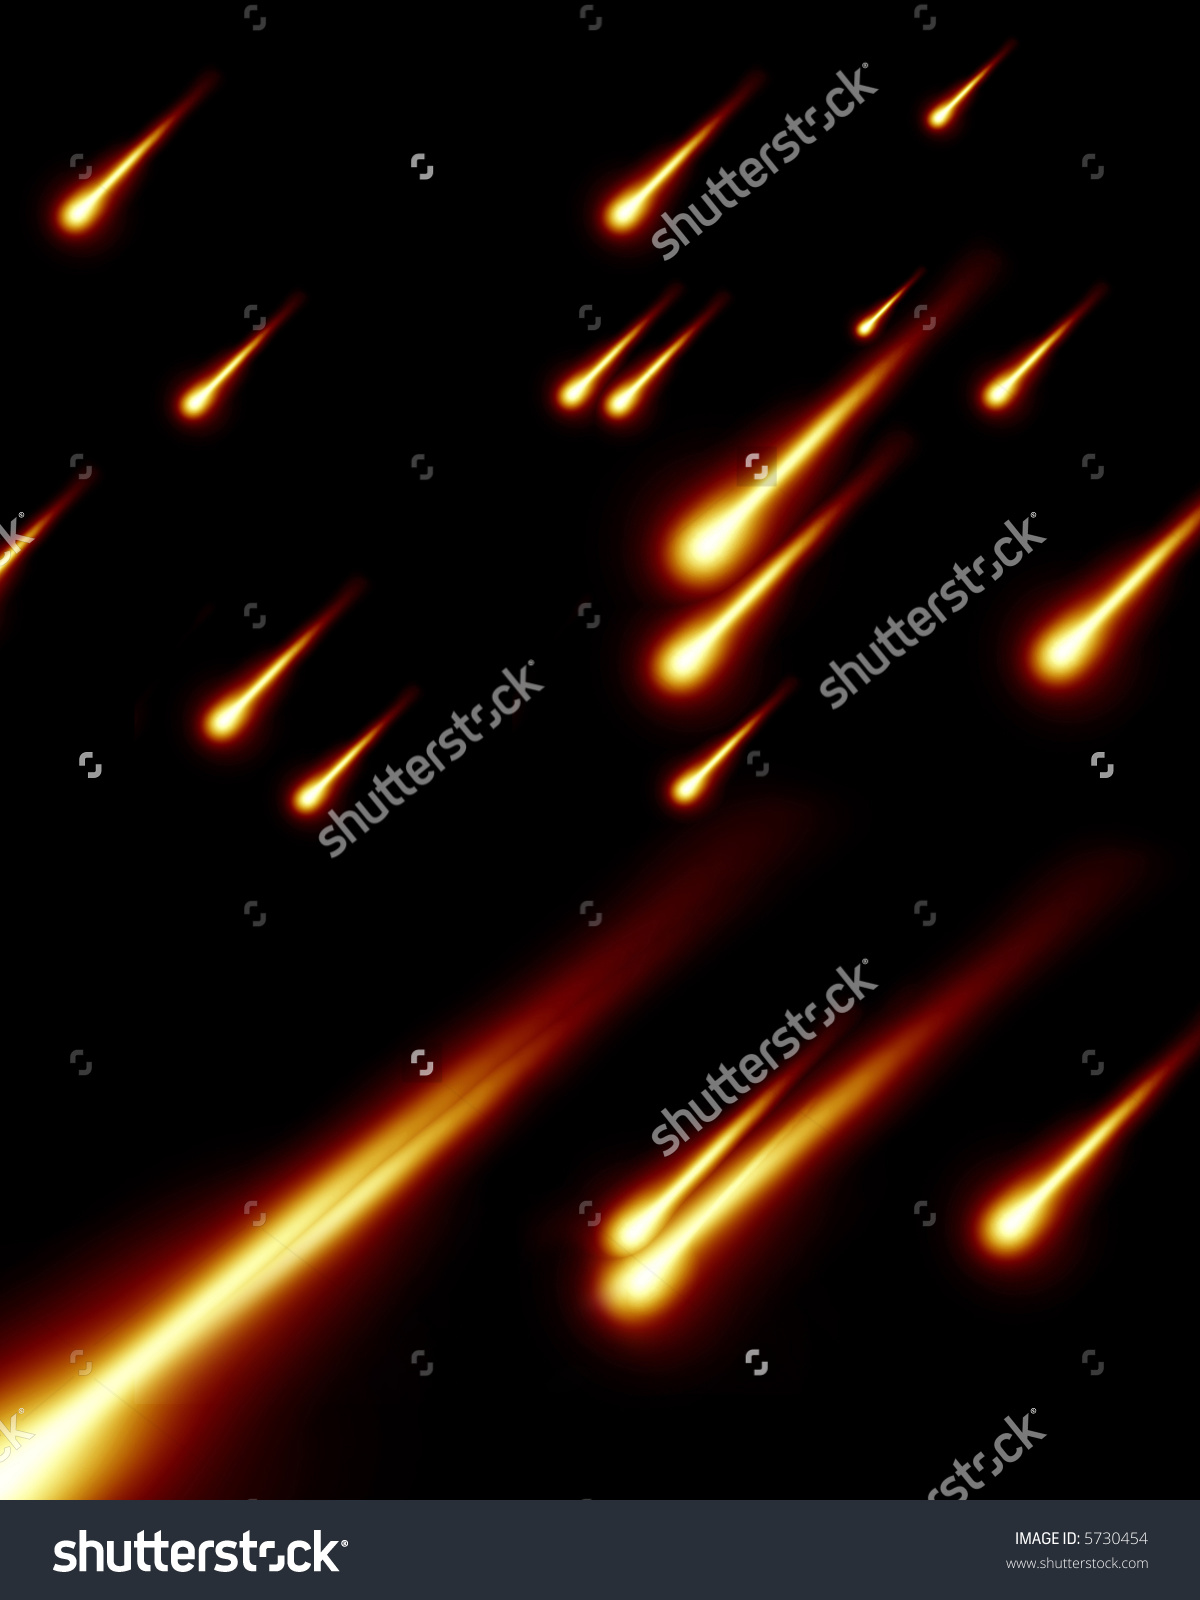 Asteroid meteor shower